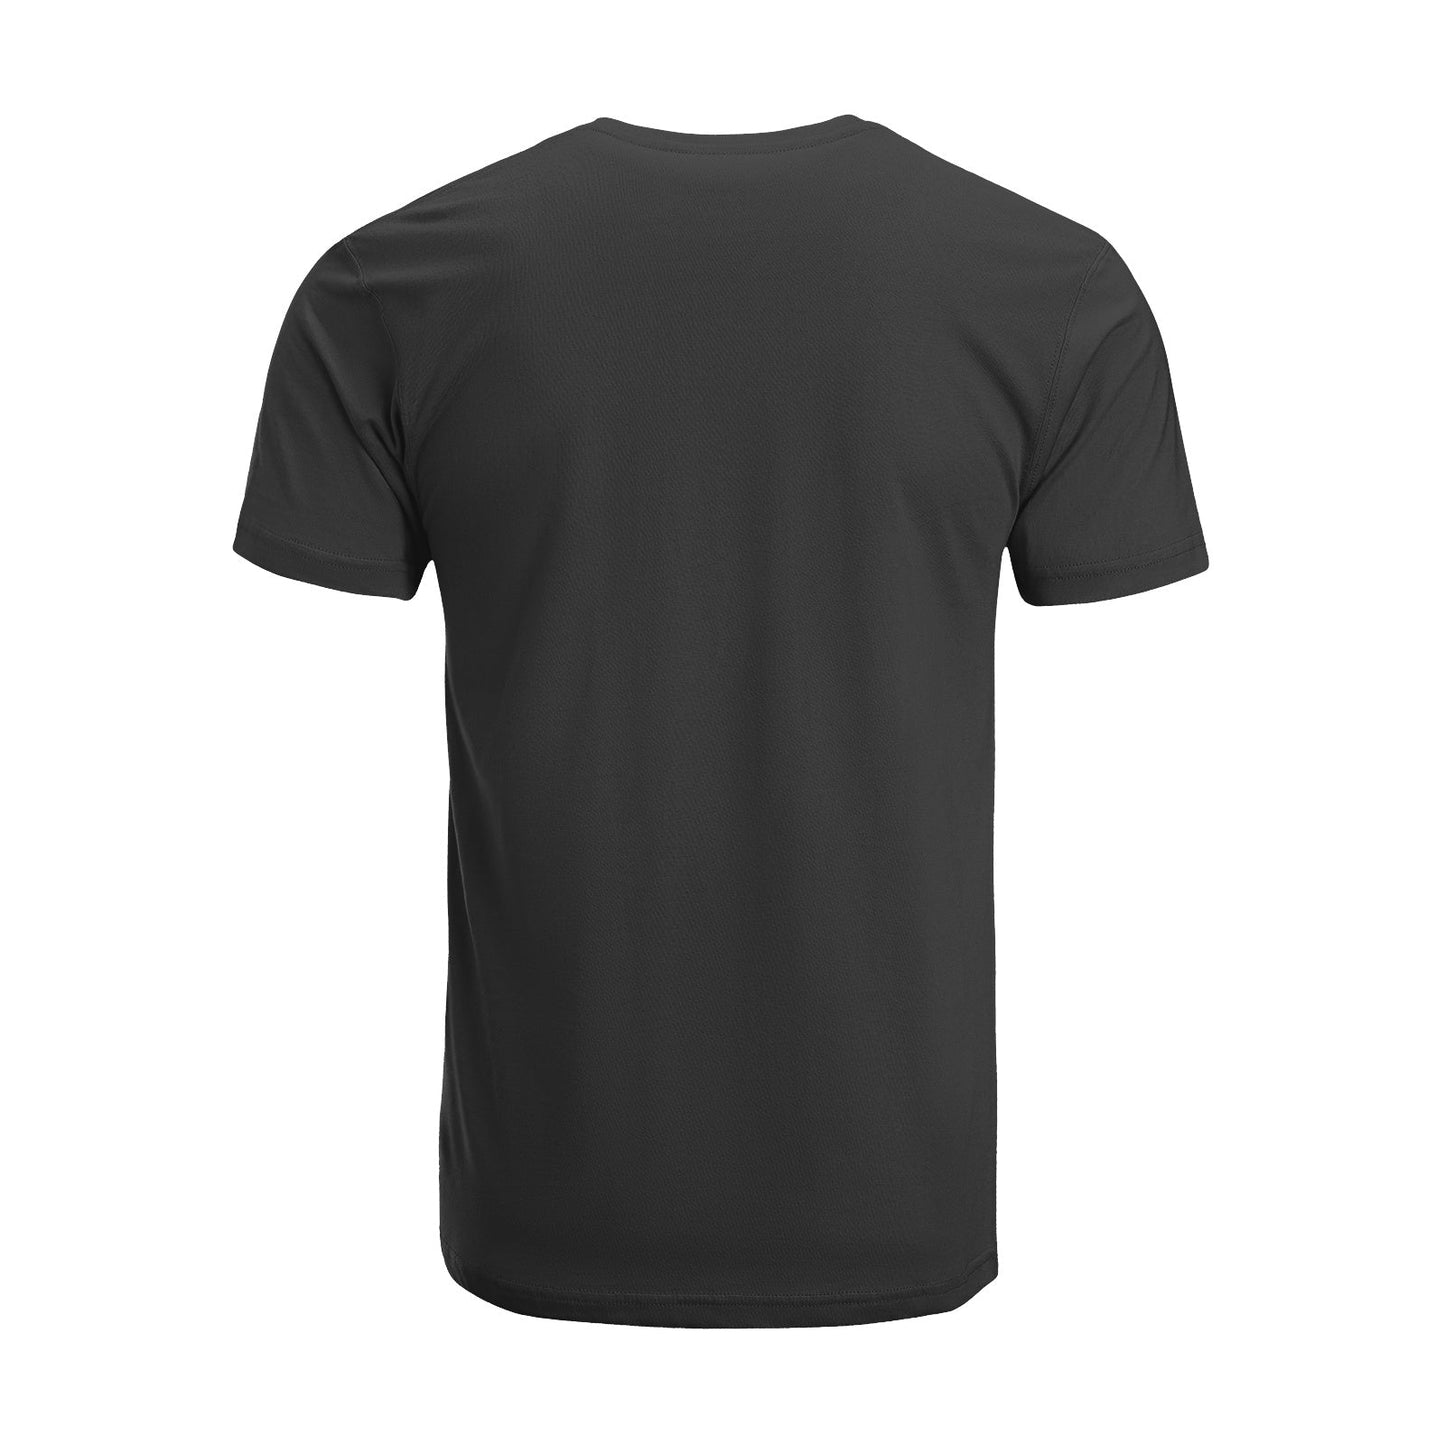 Unisex Short Sleeve Crew Neck Cotton Jersey T-Shirt Gym No. 43 - Tara-Outfits.com